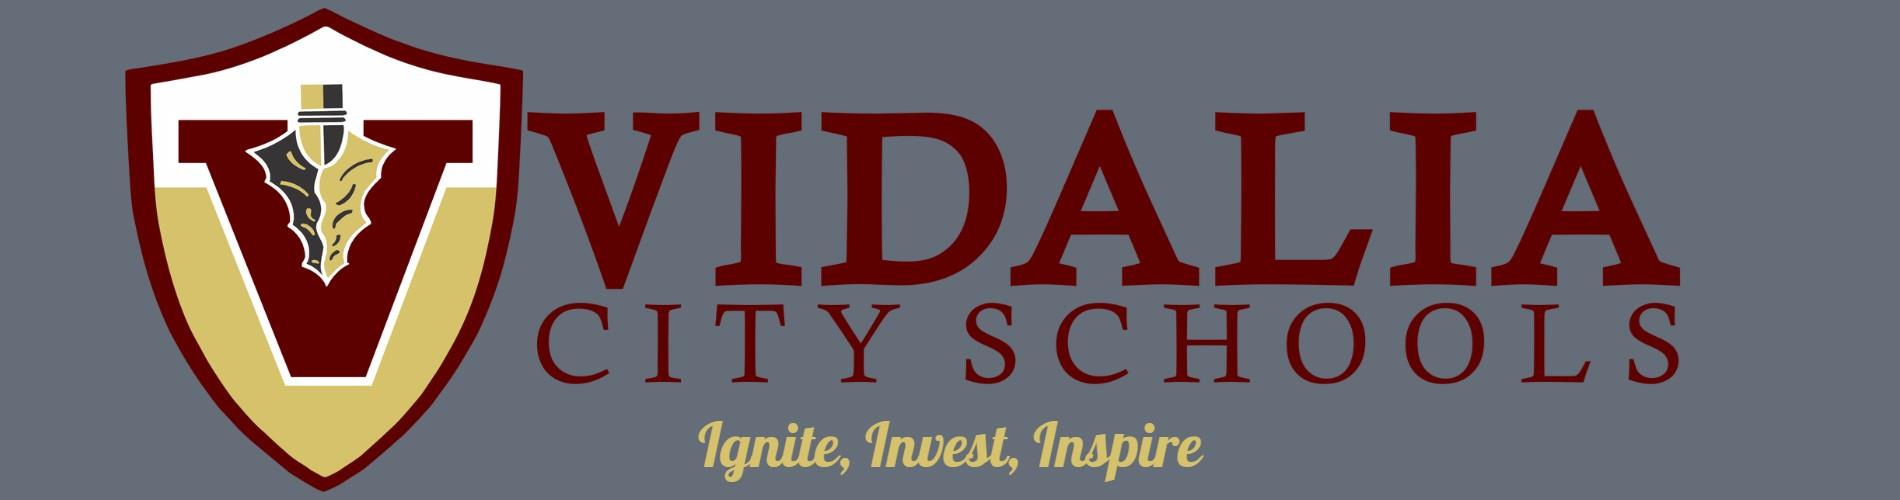 Vidalia City Schools Logo Formal